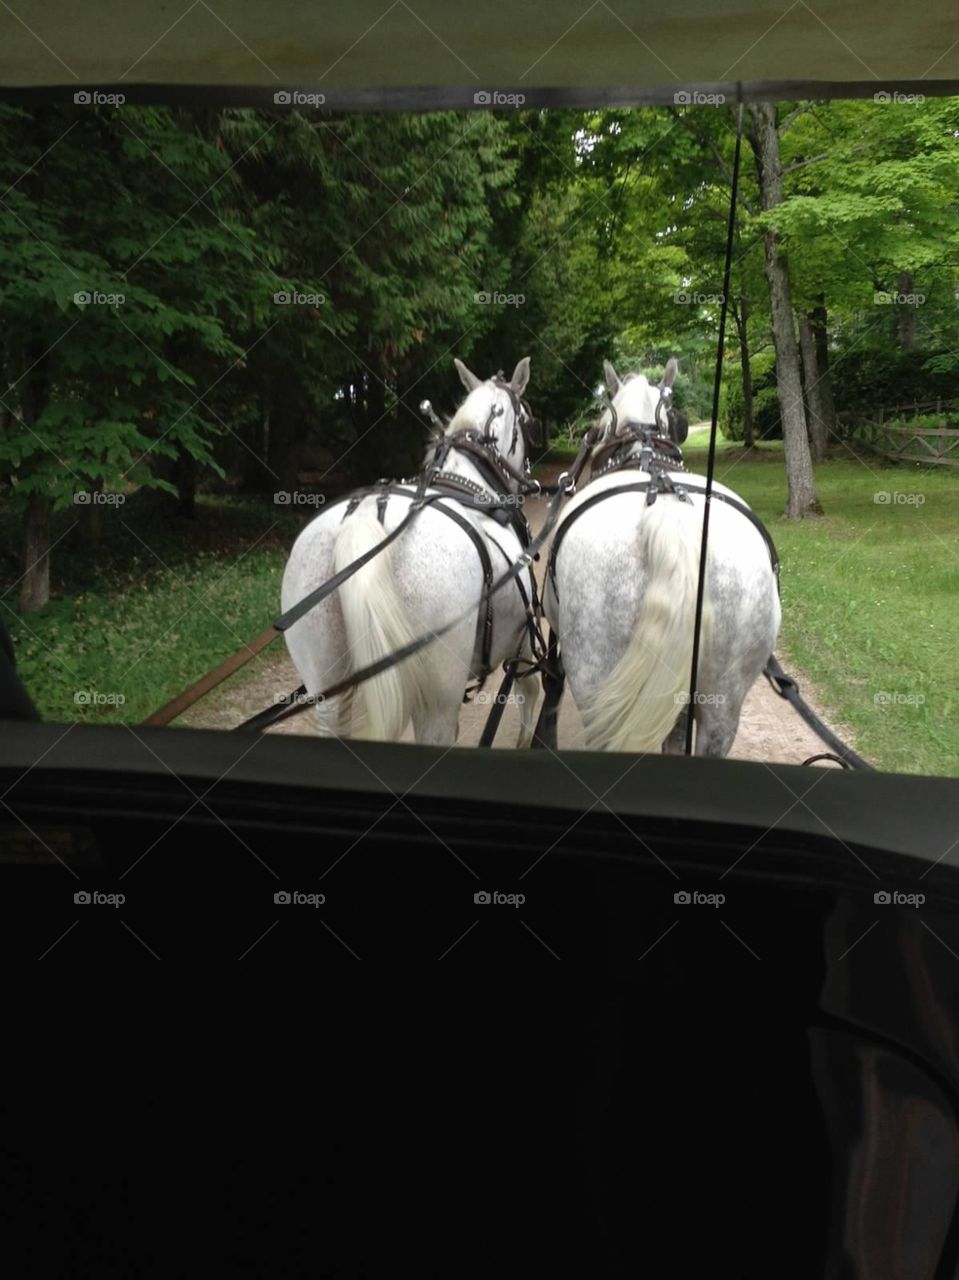 Horse Drawn Carriage . Riding in a horse drawn carriage touring Mackinaw Island, Michigan. 